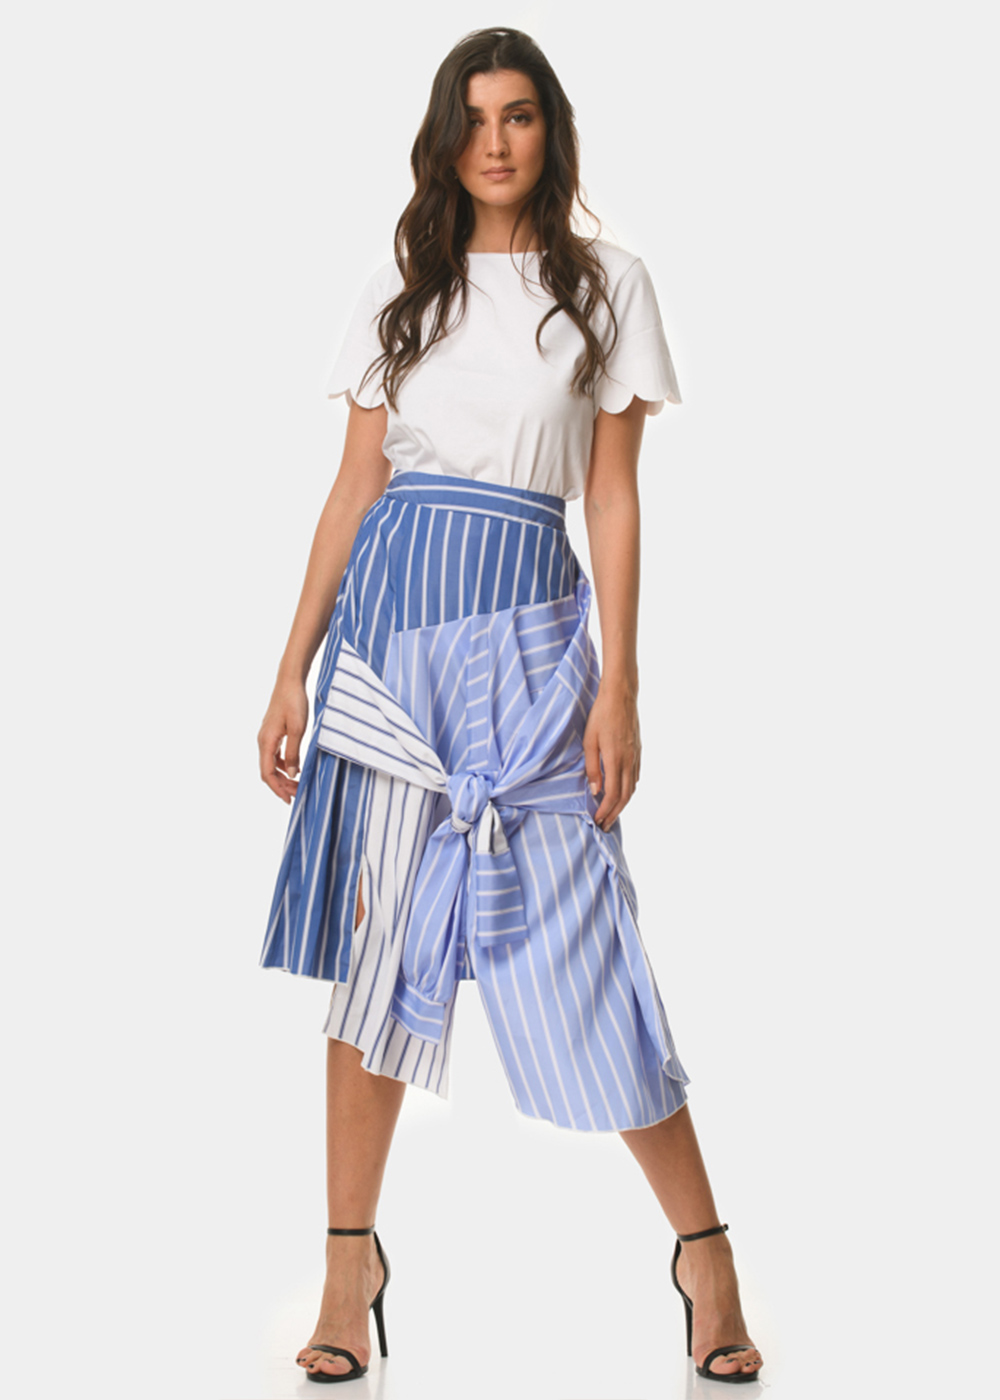 Striped shirt style skirt